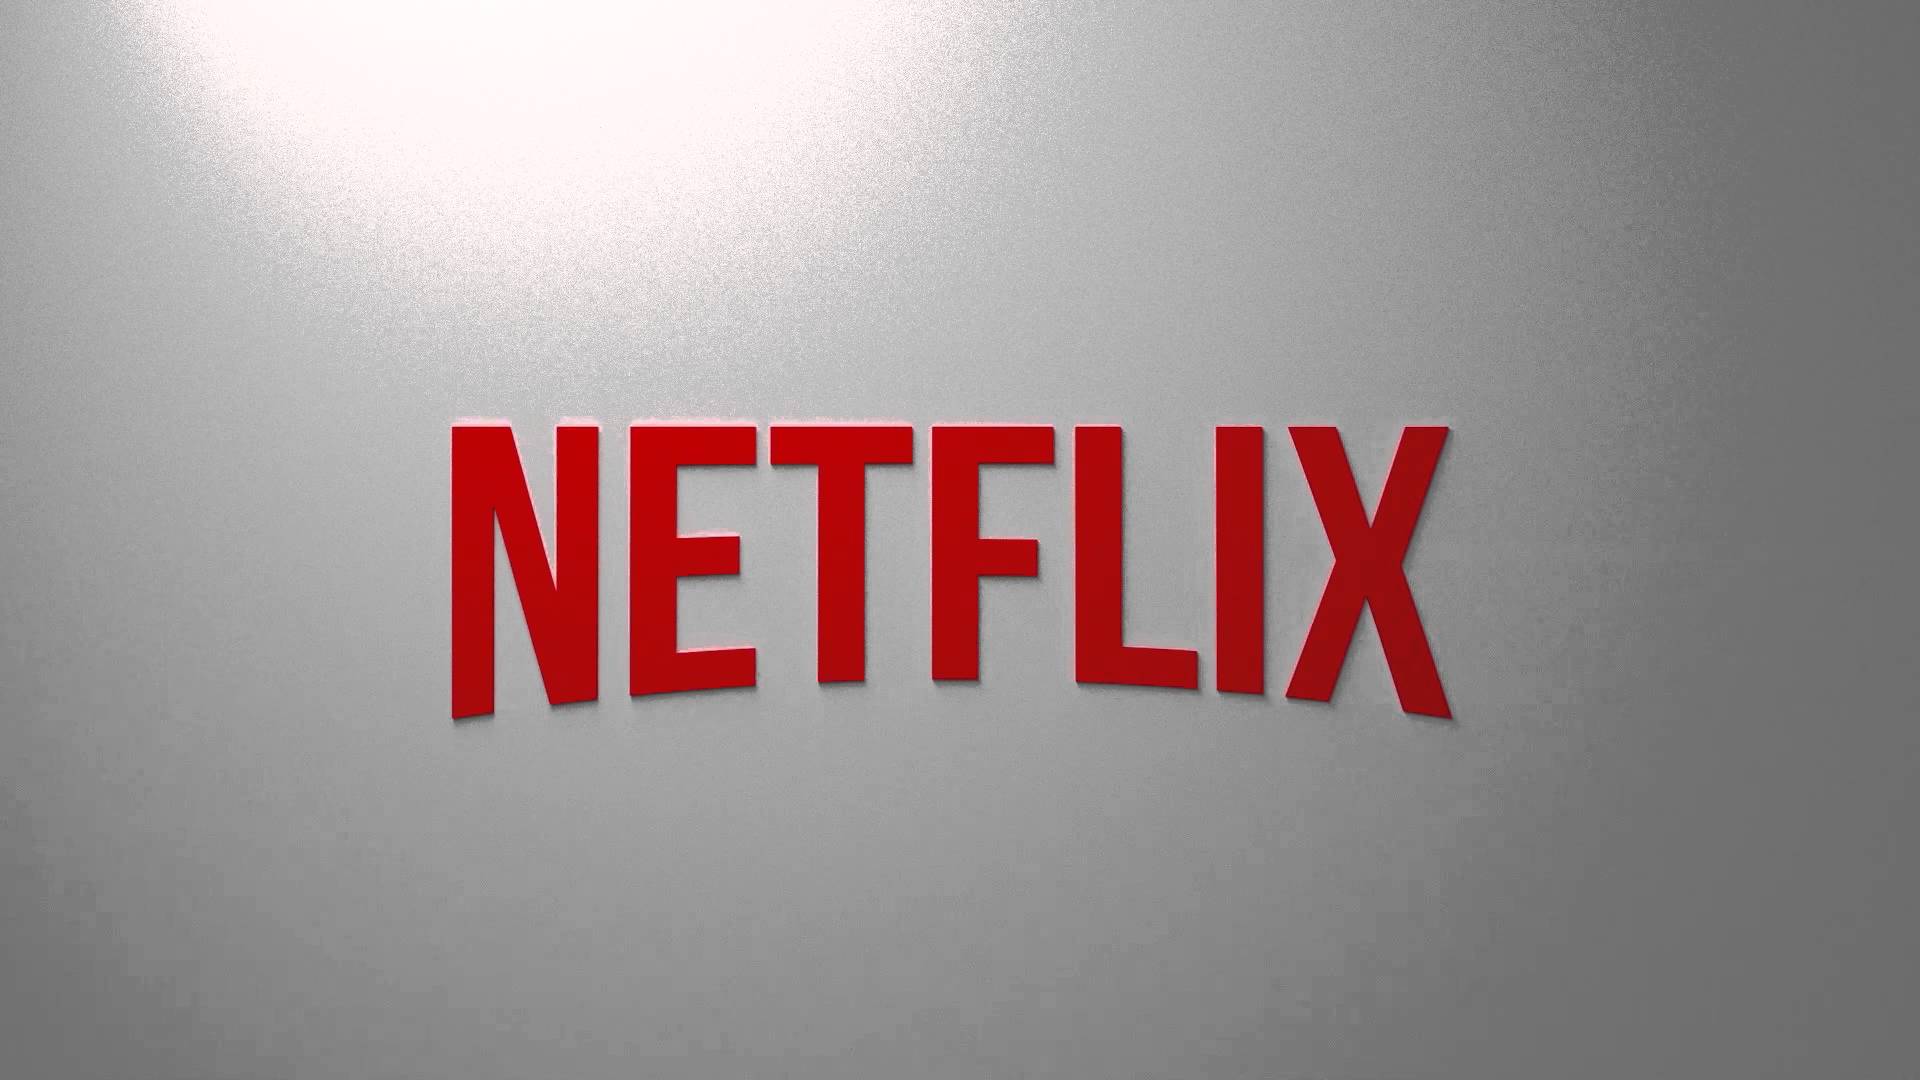 Next Netflix Logo - Netflix Is Releasing 80 Original Movies Next Year, So Get Ready to